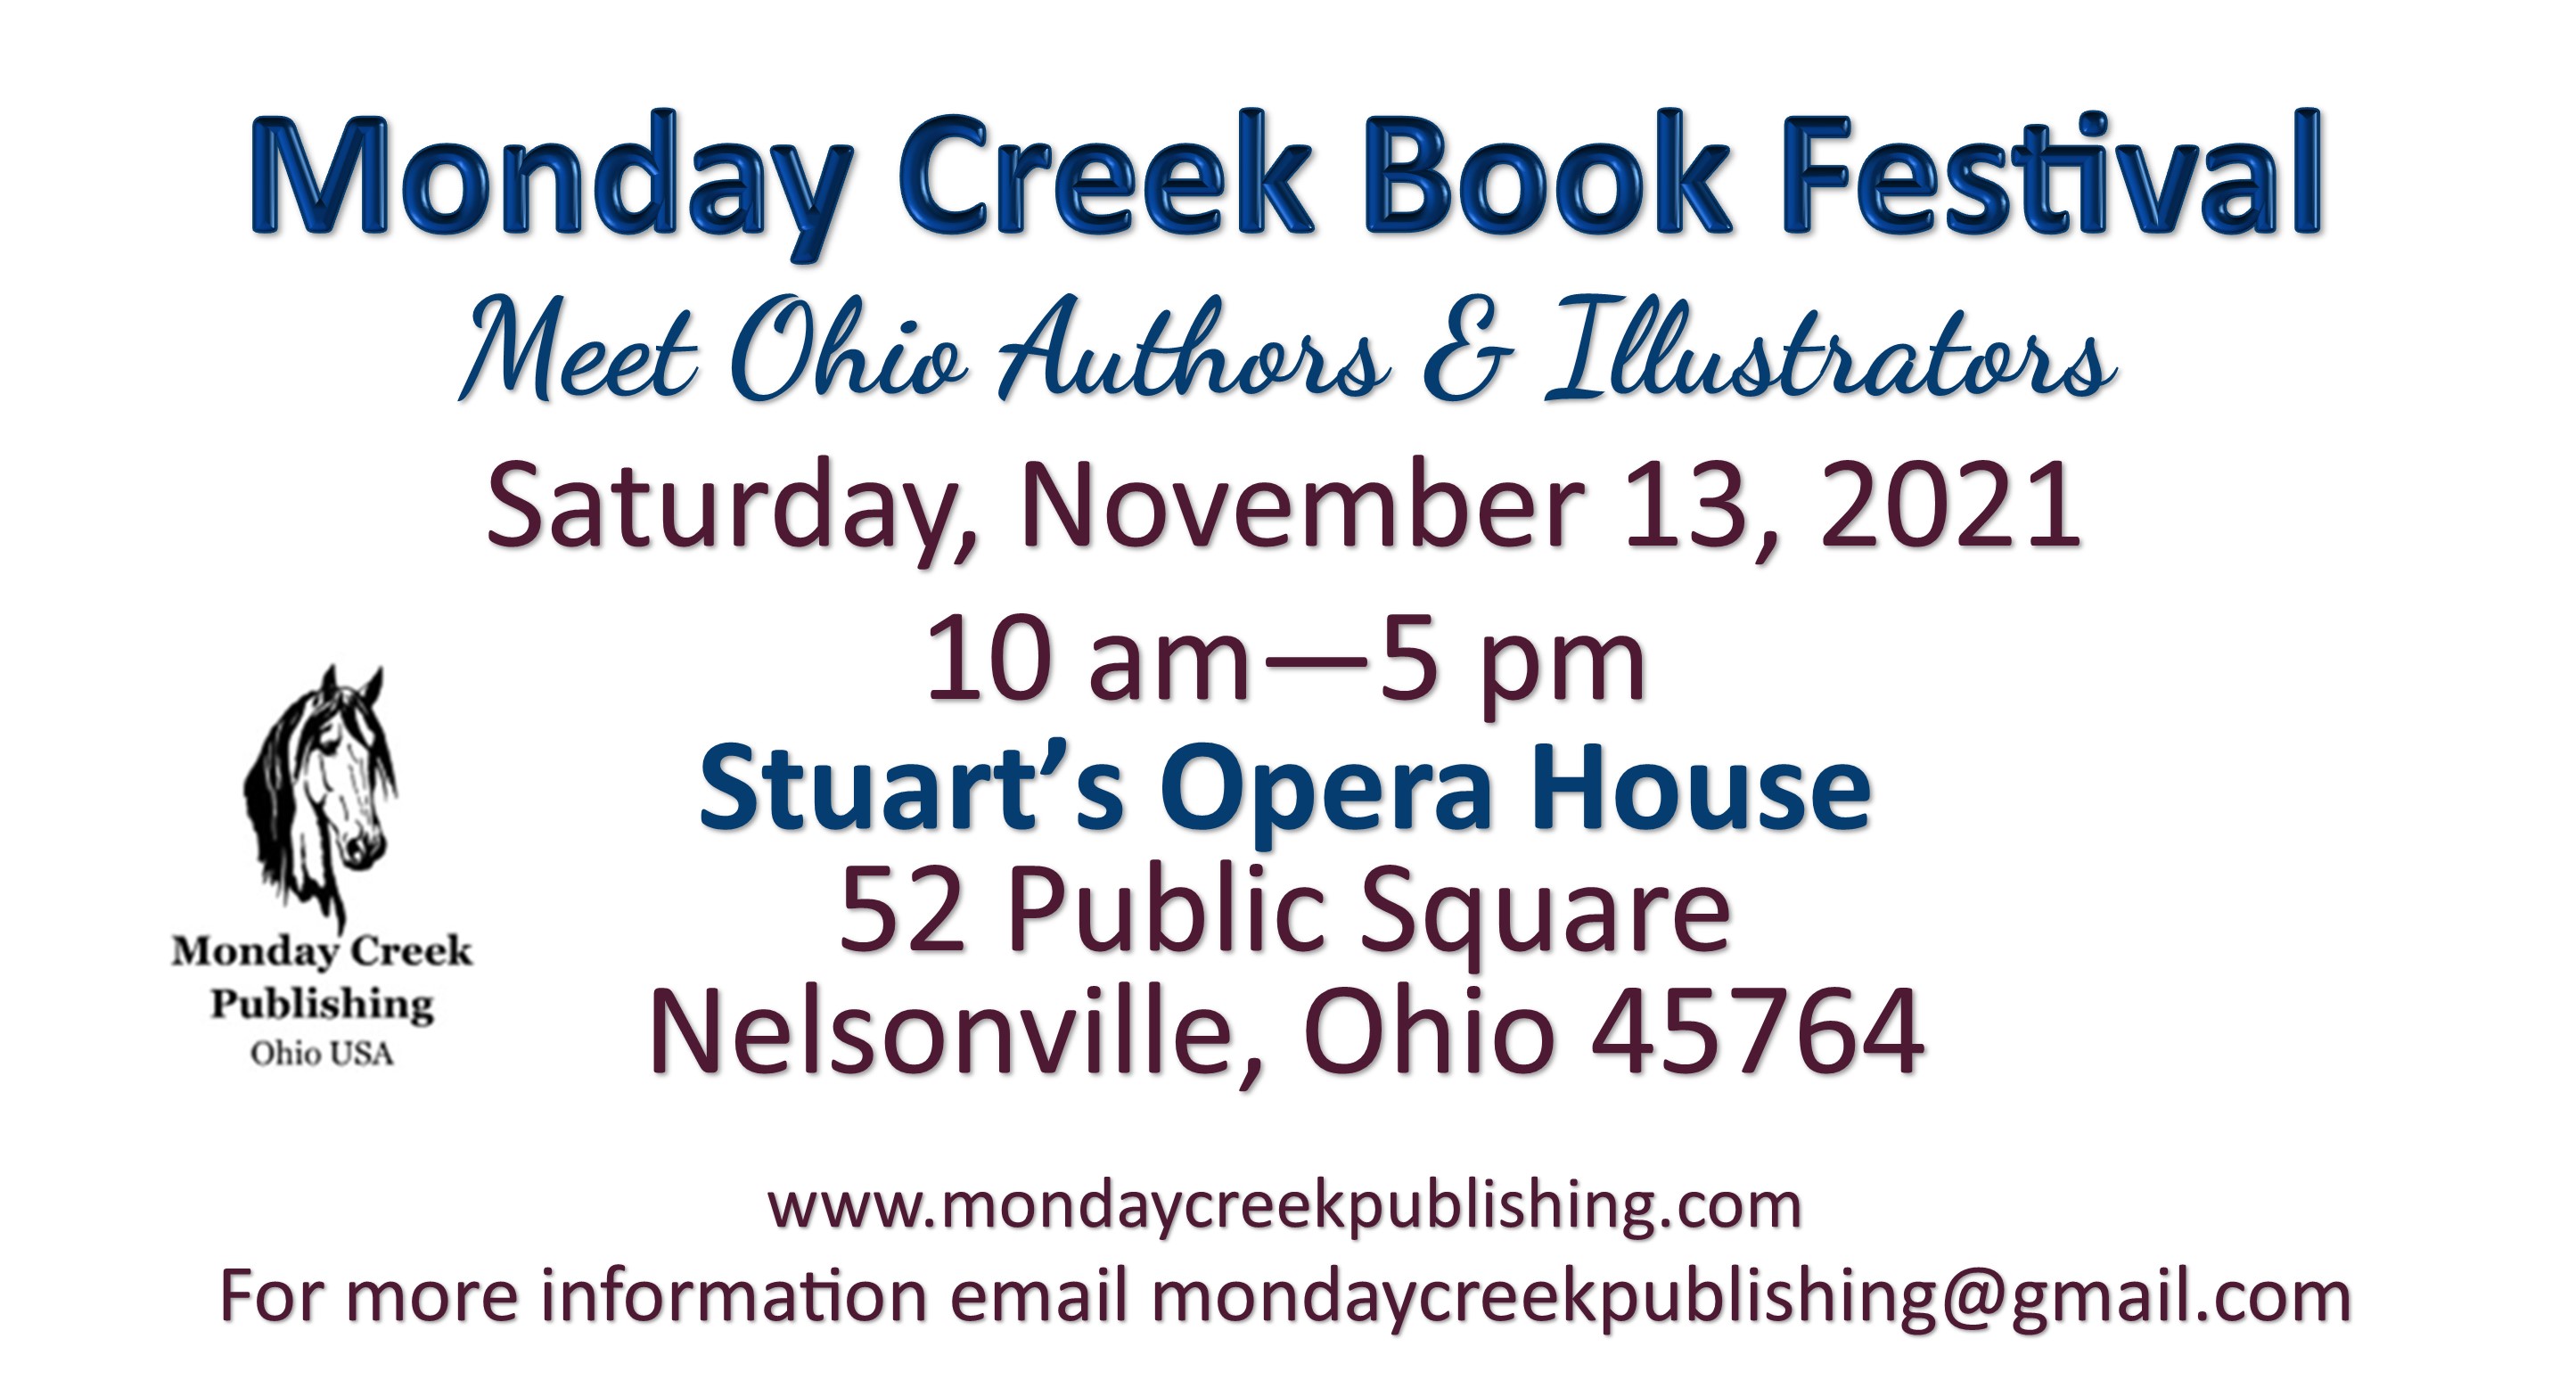 Monday Creek book festival header image